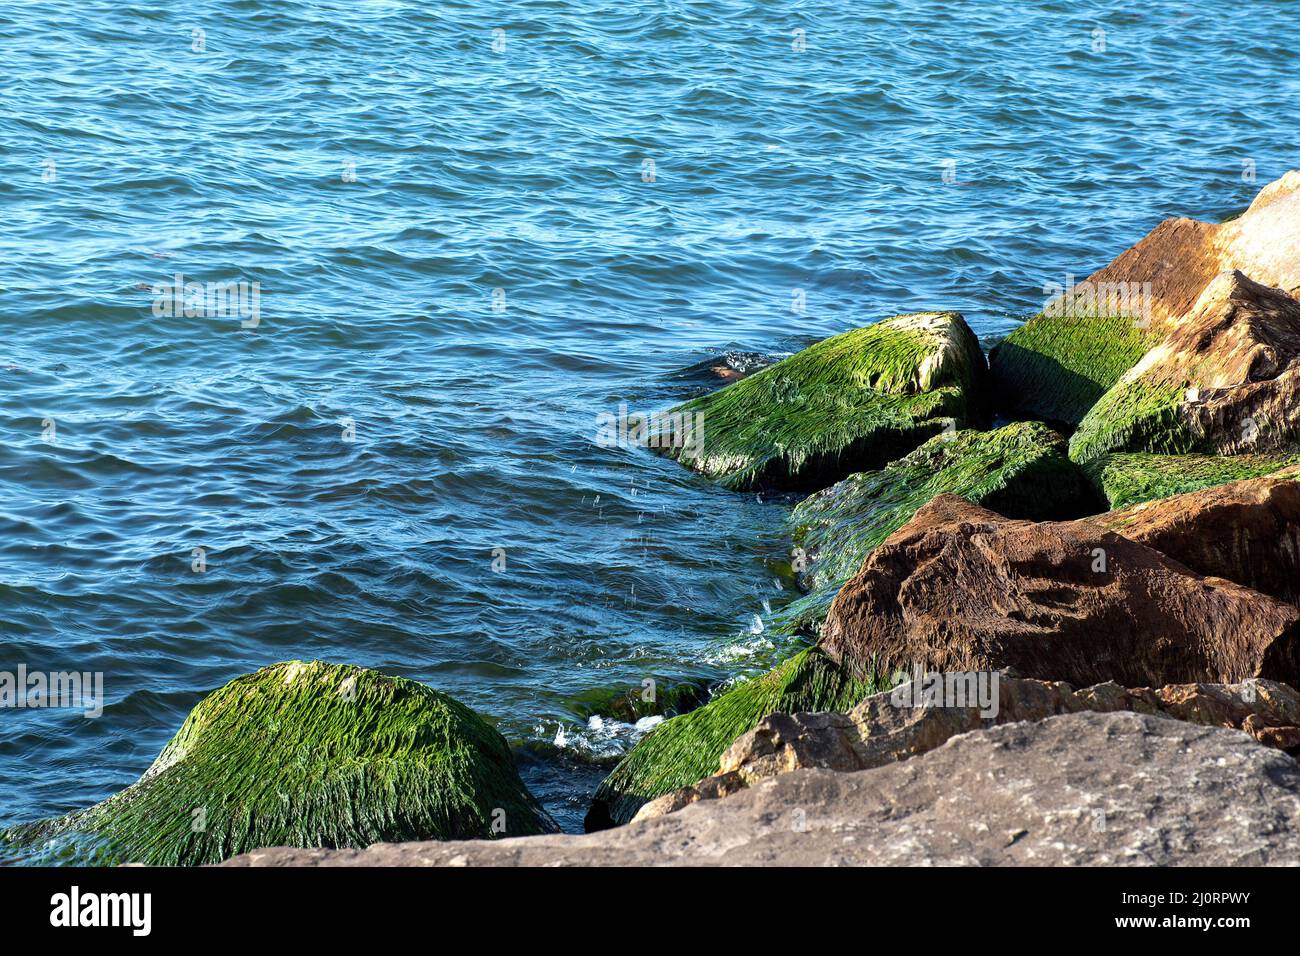 Green algae growing on rocks in Lake Michigan Stock Photo